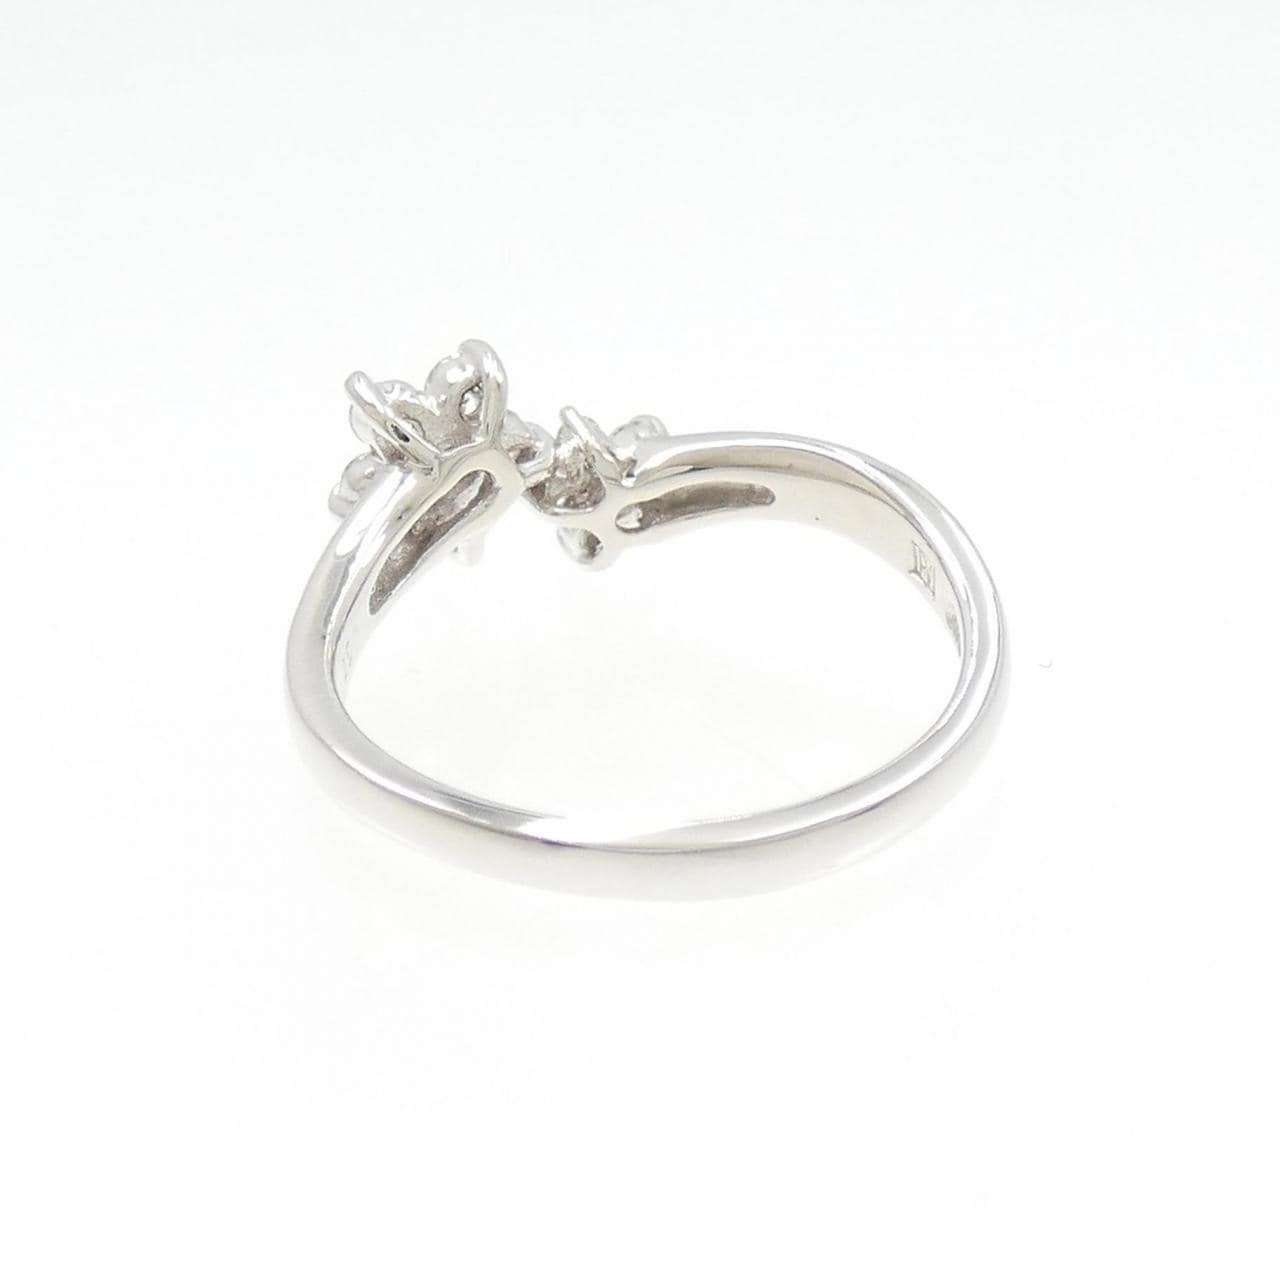 PONTE VECCHIO Flower Diamond Ring 0.25CT